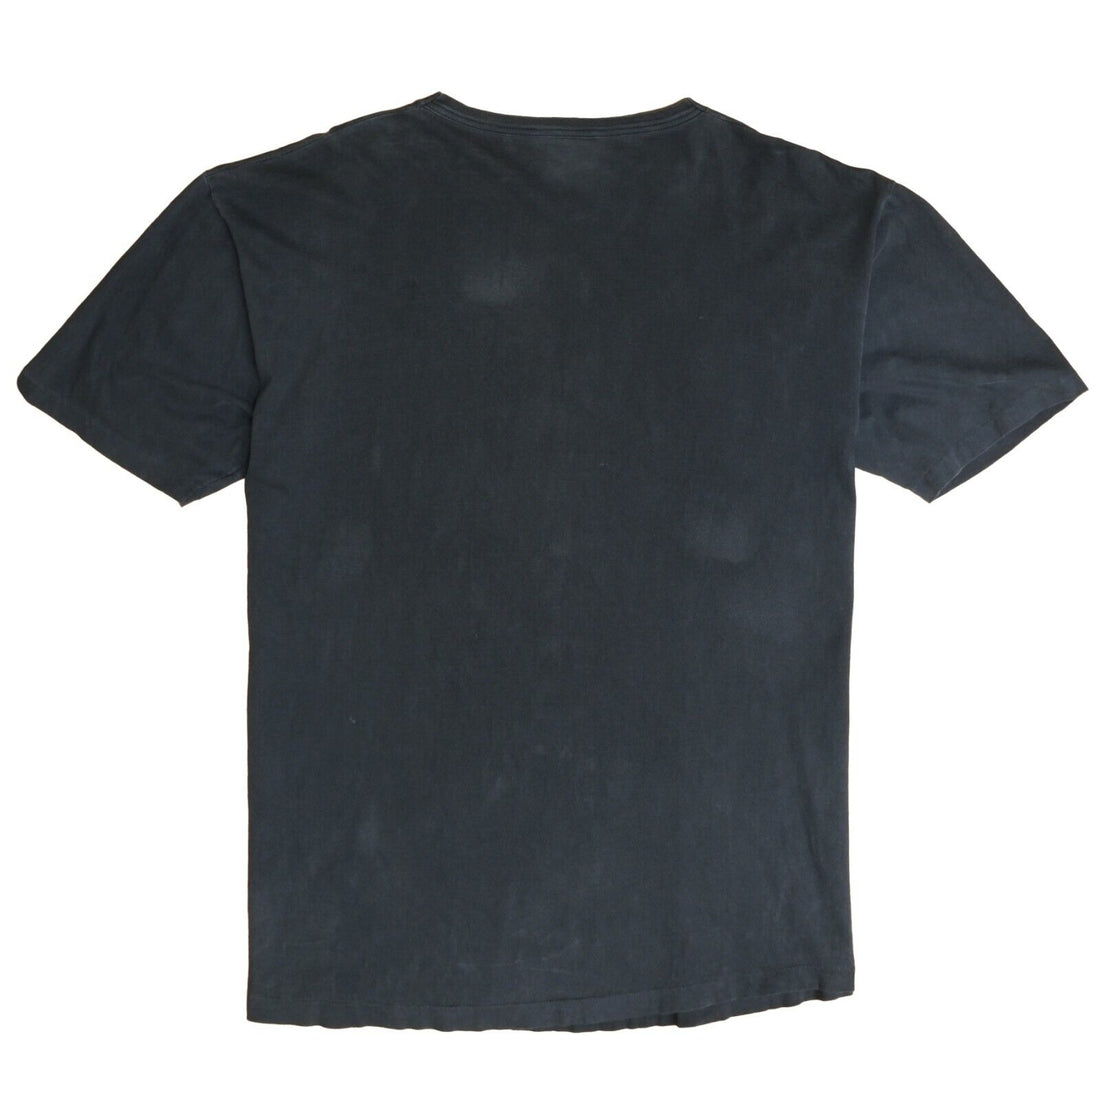 Vintage Ozzy Osbourne T-Shirt Size Large Black Band Tee